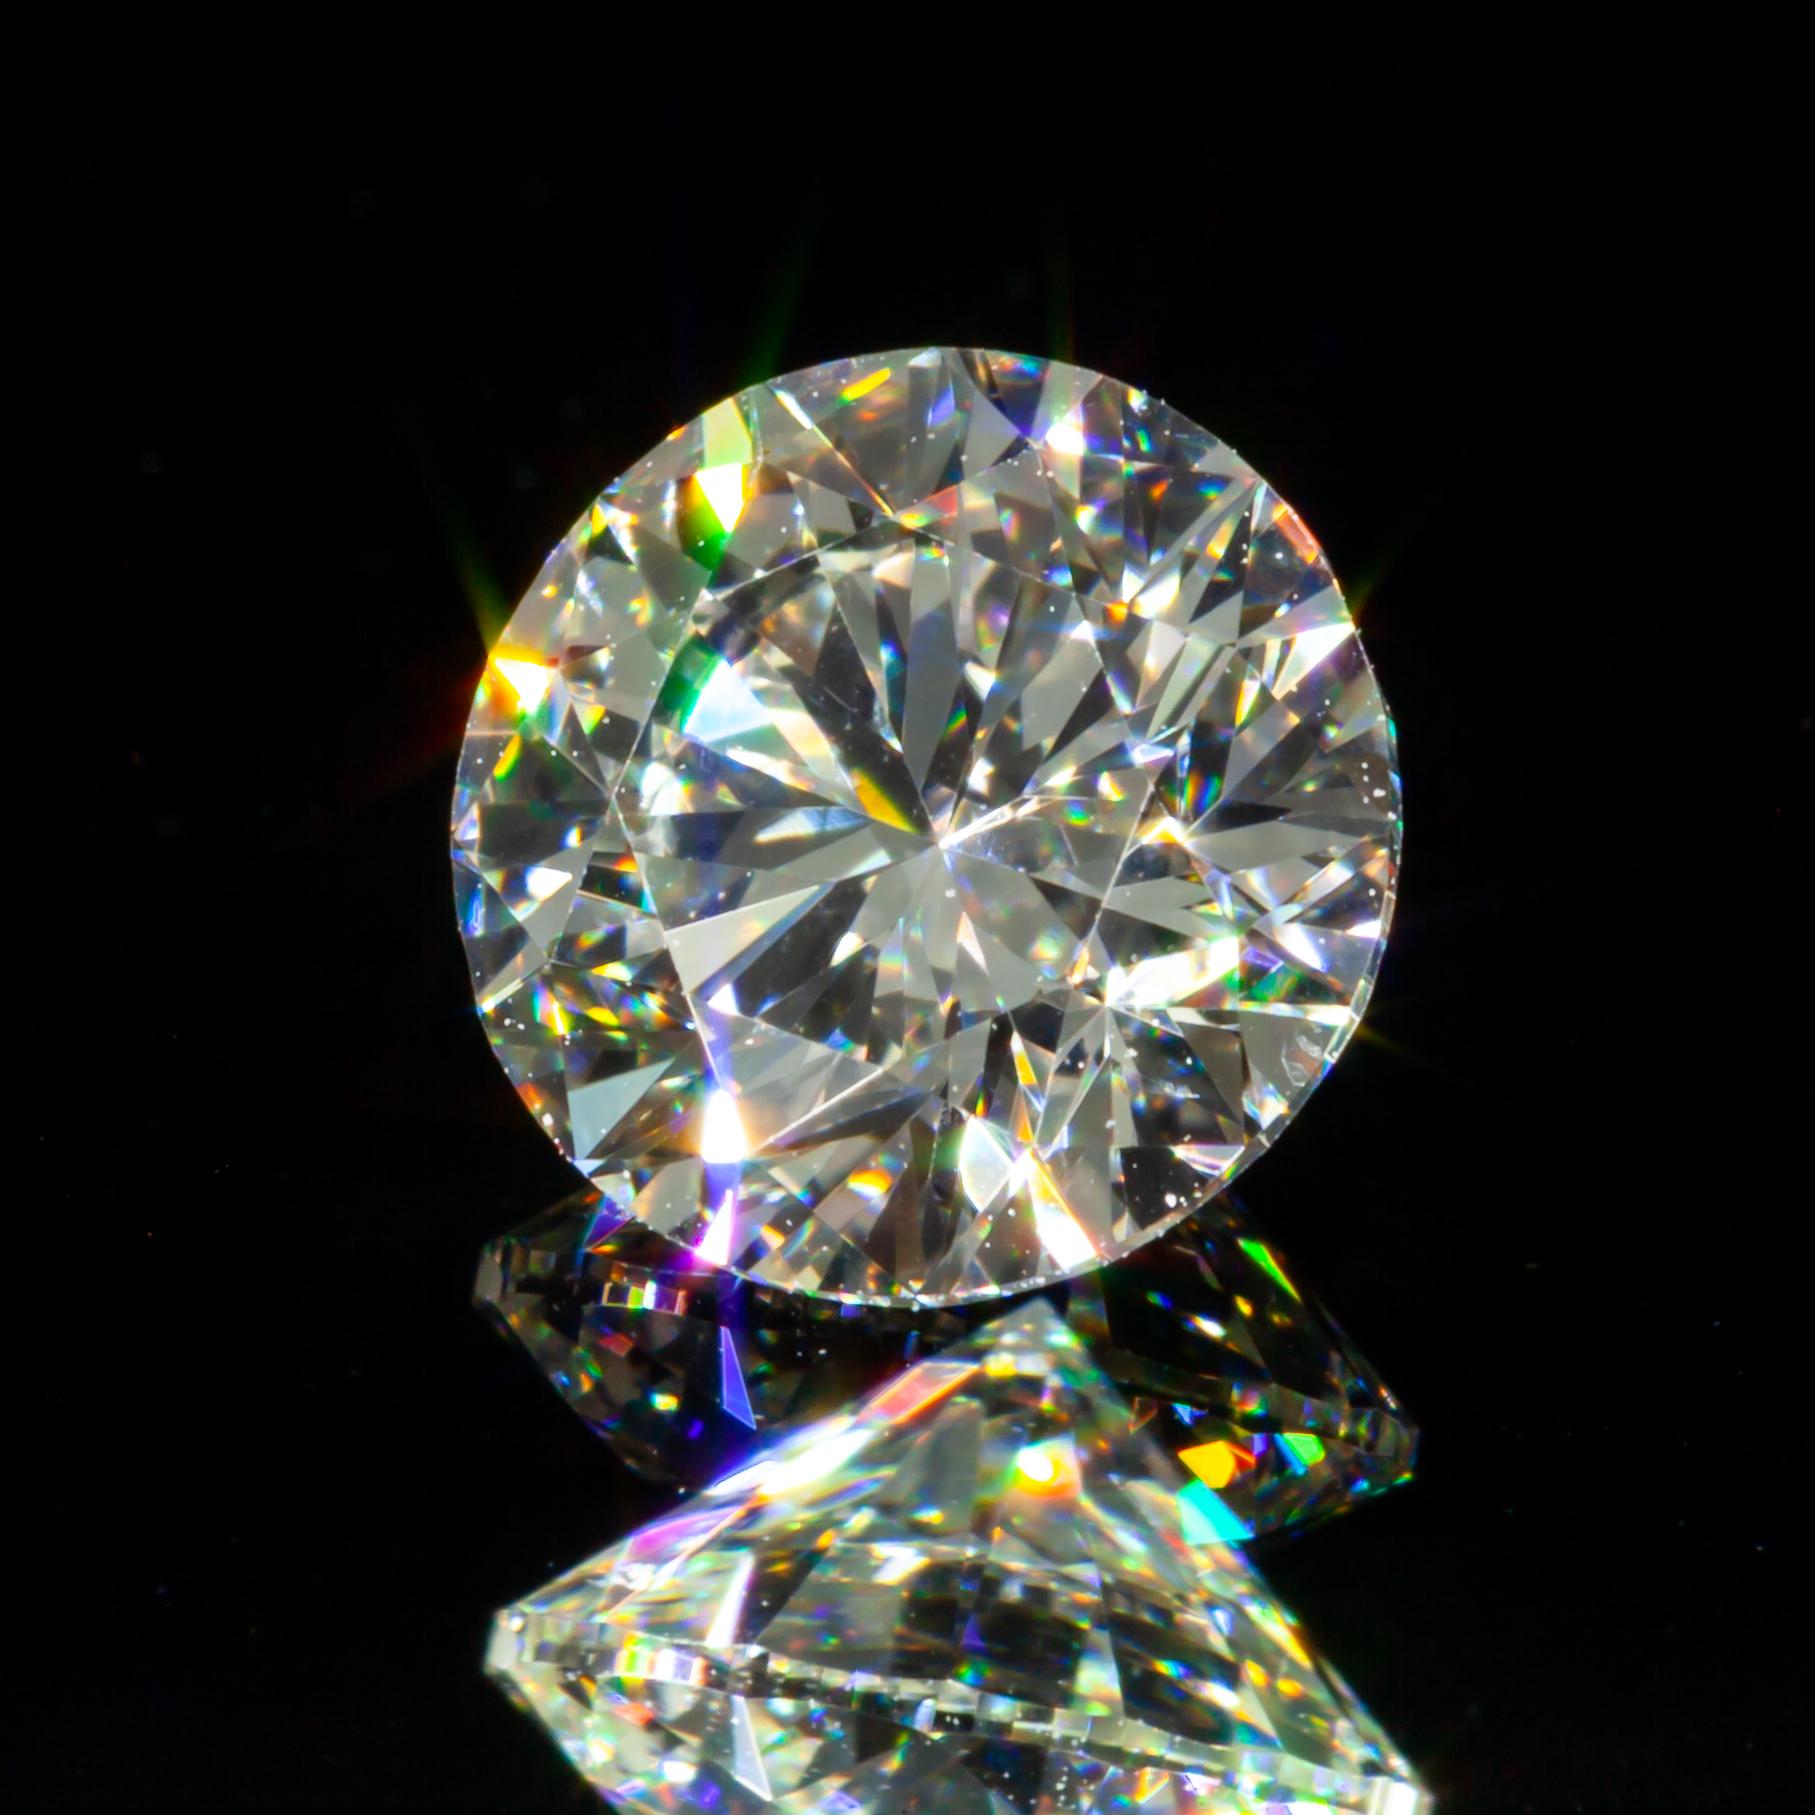 Diamond General Info
Diamond Cut: Round brilliant
Measurements:6.25  x  6.32  -  3.98 mm

Diamond Grading Results
Carat Weight:1.00
Color Grade: K
Clarity Grade: VS2

Additional Grading Information 
Polish:  Good
Symmetry: